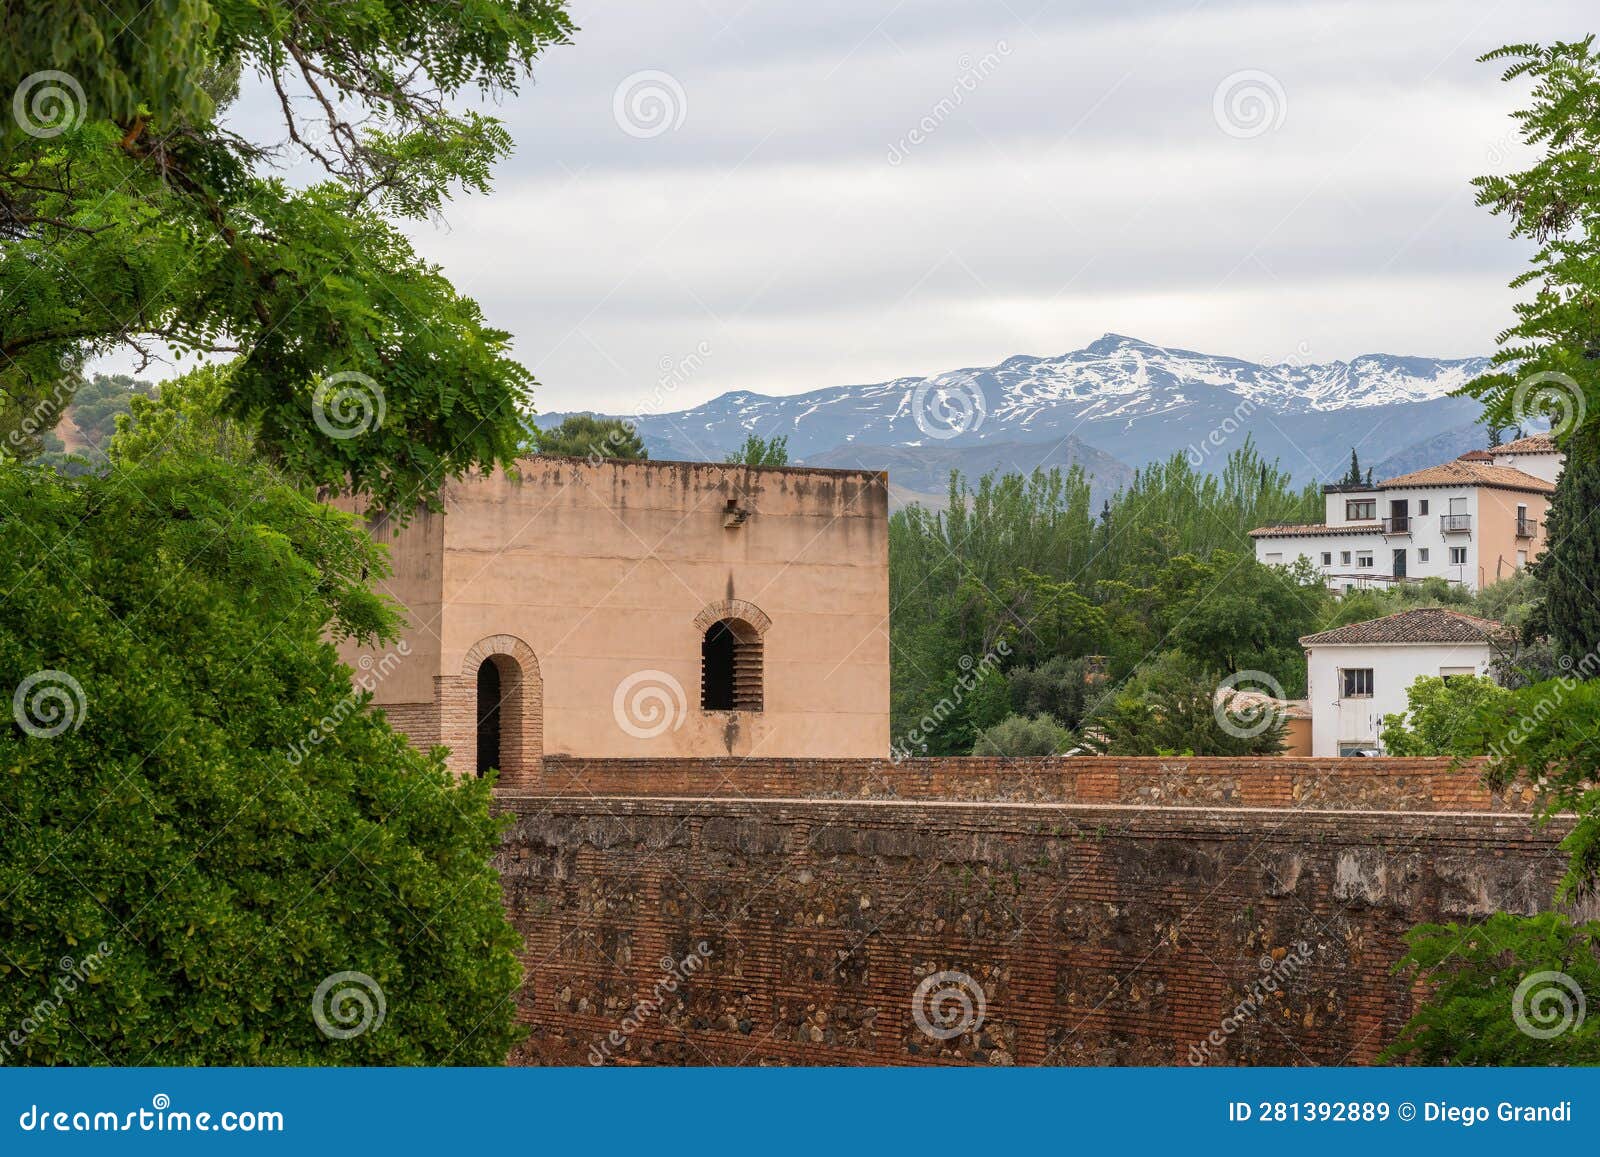 tower of baltasar de la cruz at alhambra with sierra nevada mountains - granada, andalusia, spain